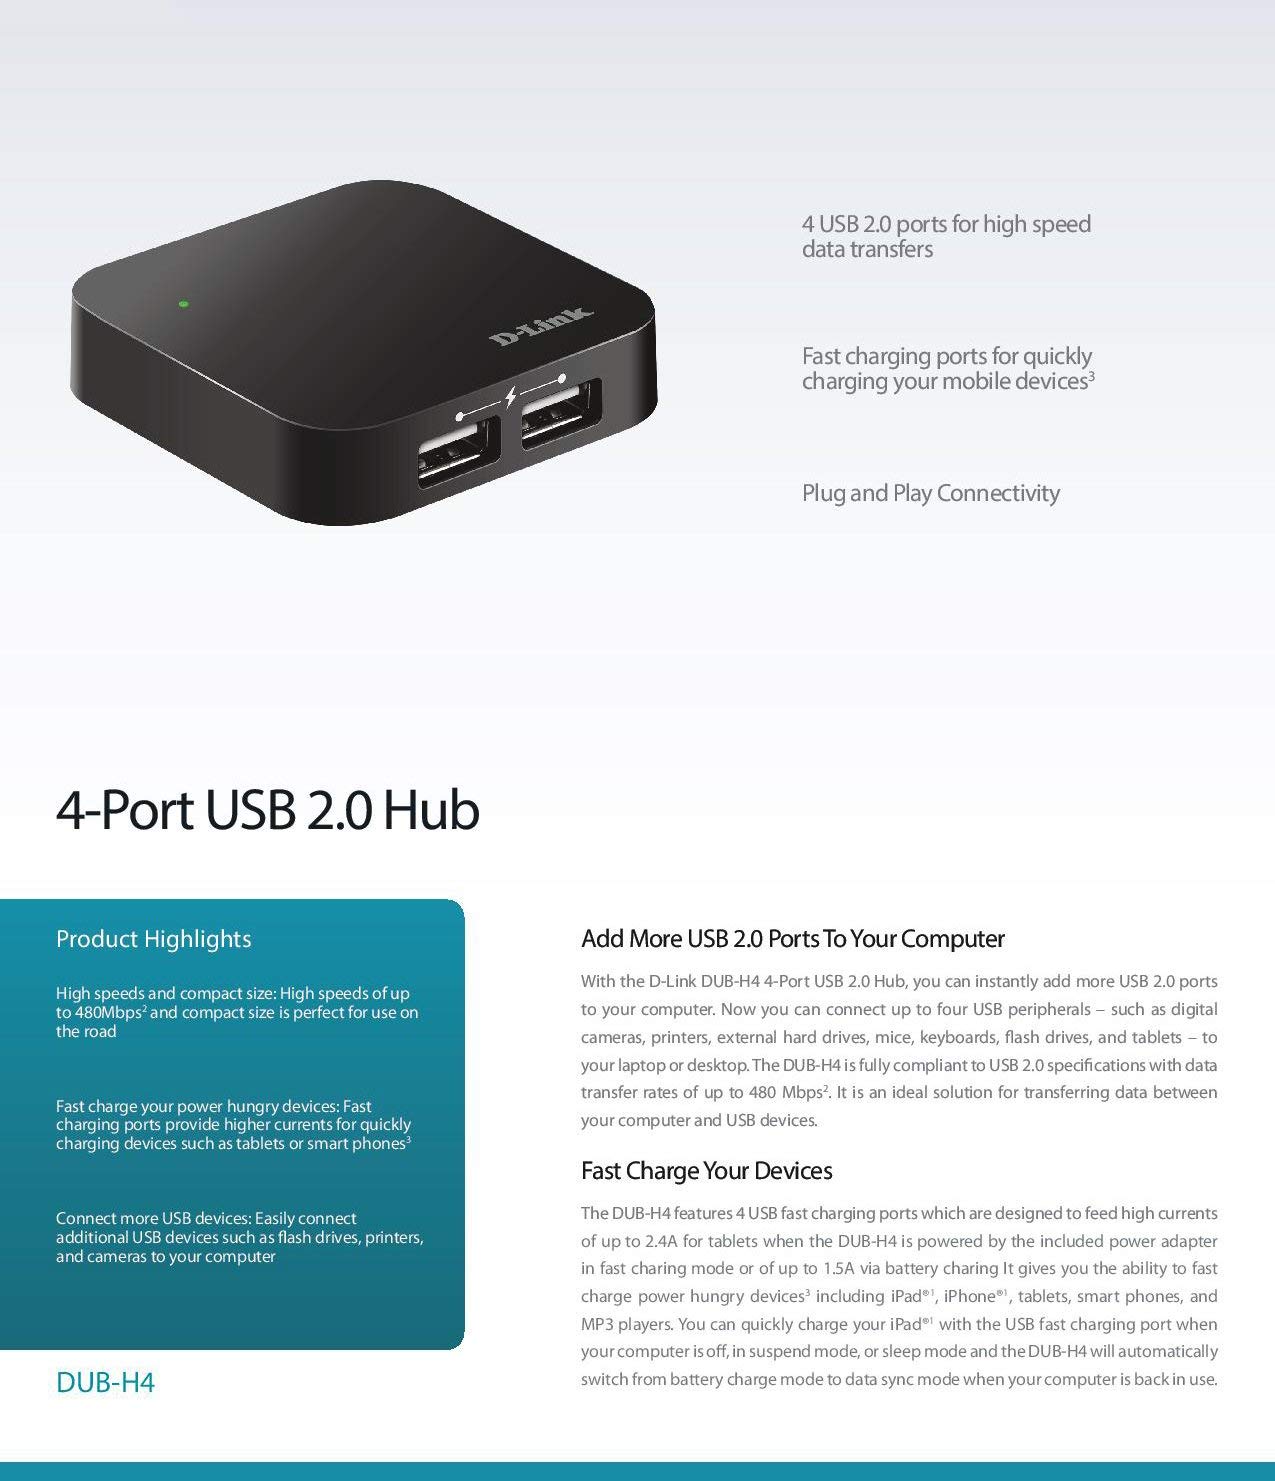 D-Link DUB-H4 4-Port USB 2.0 Hub - image 5 of 7